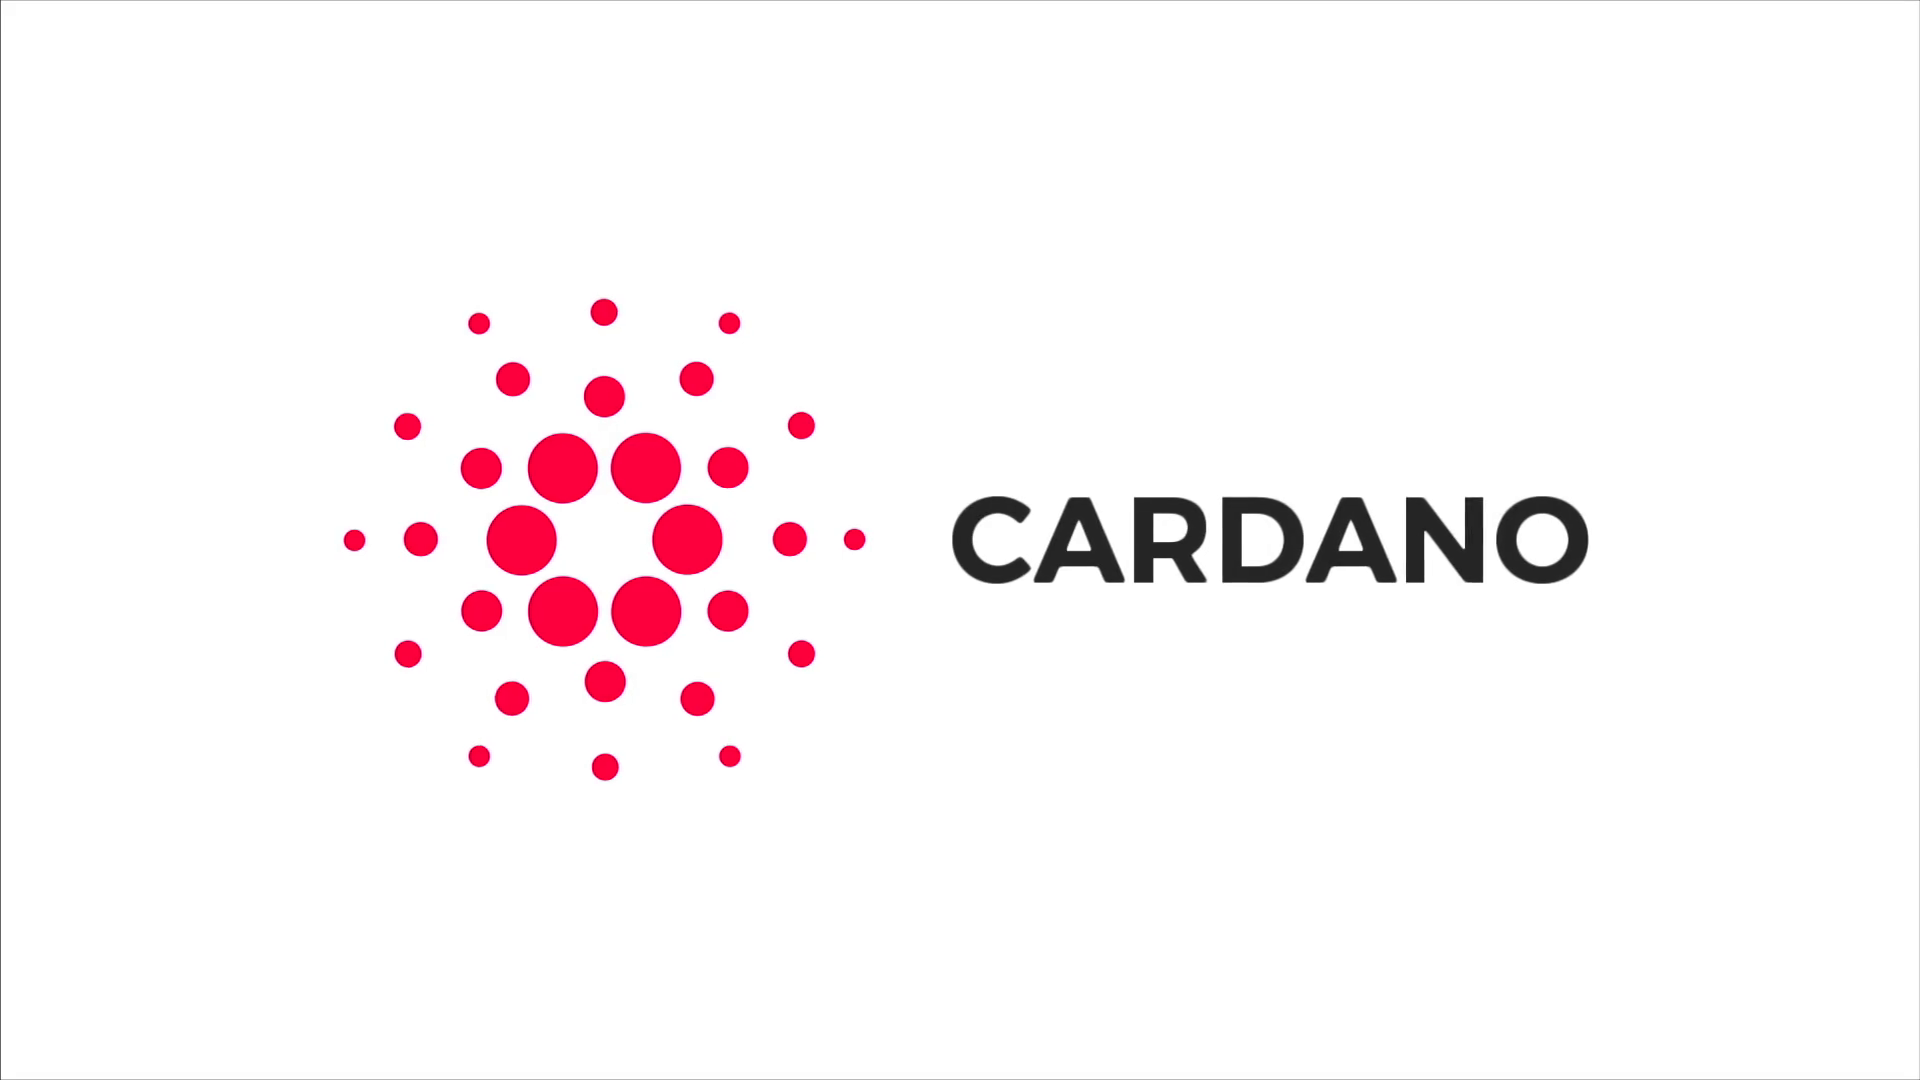 cardano logo - Kryptozeitung